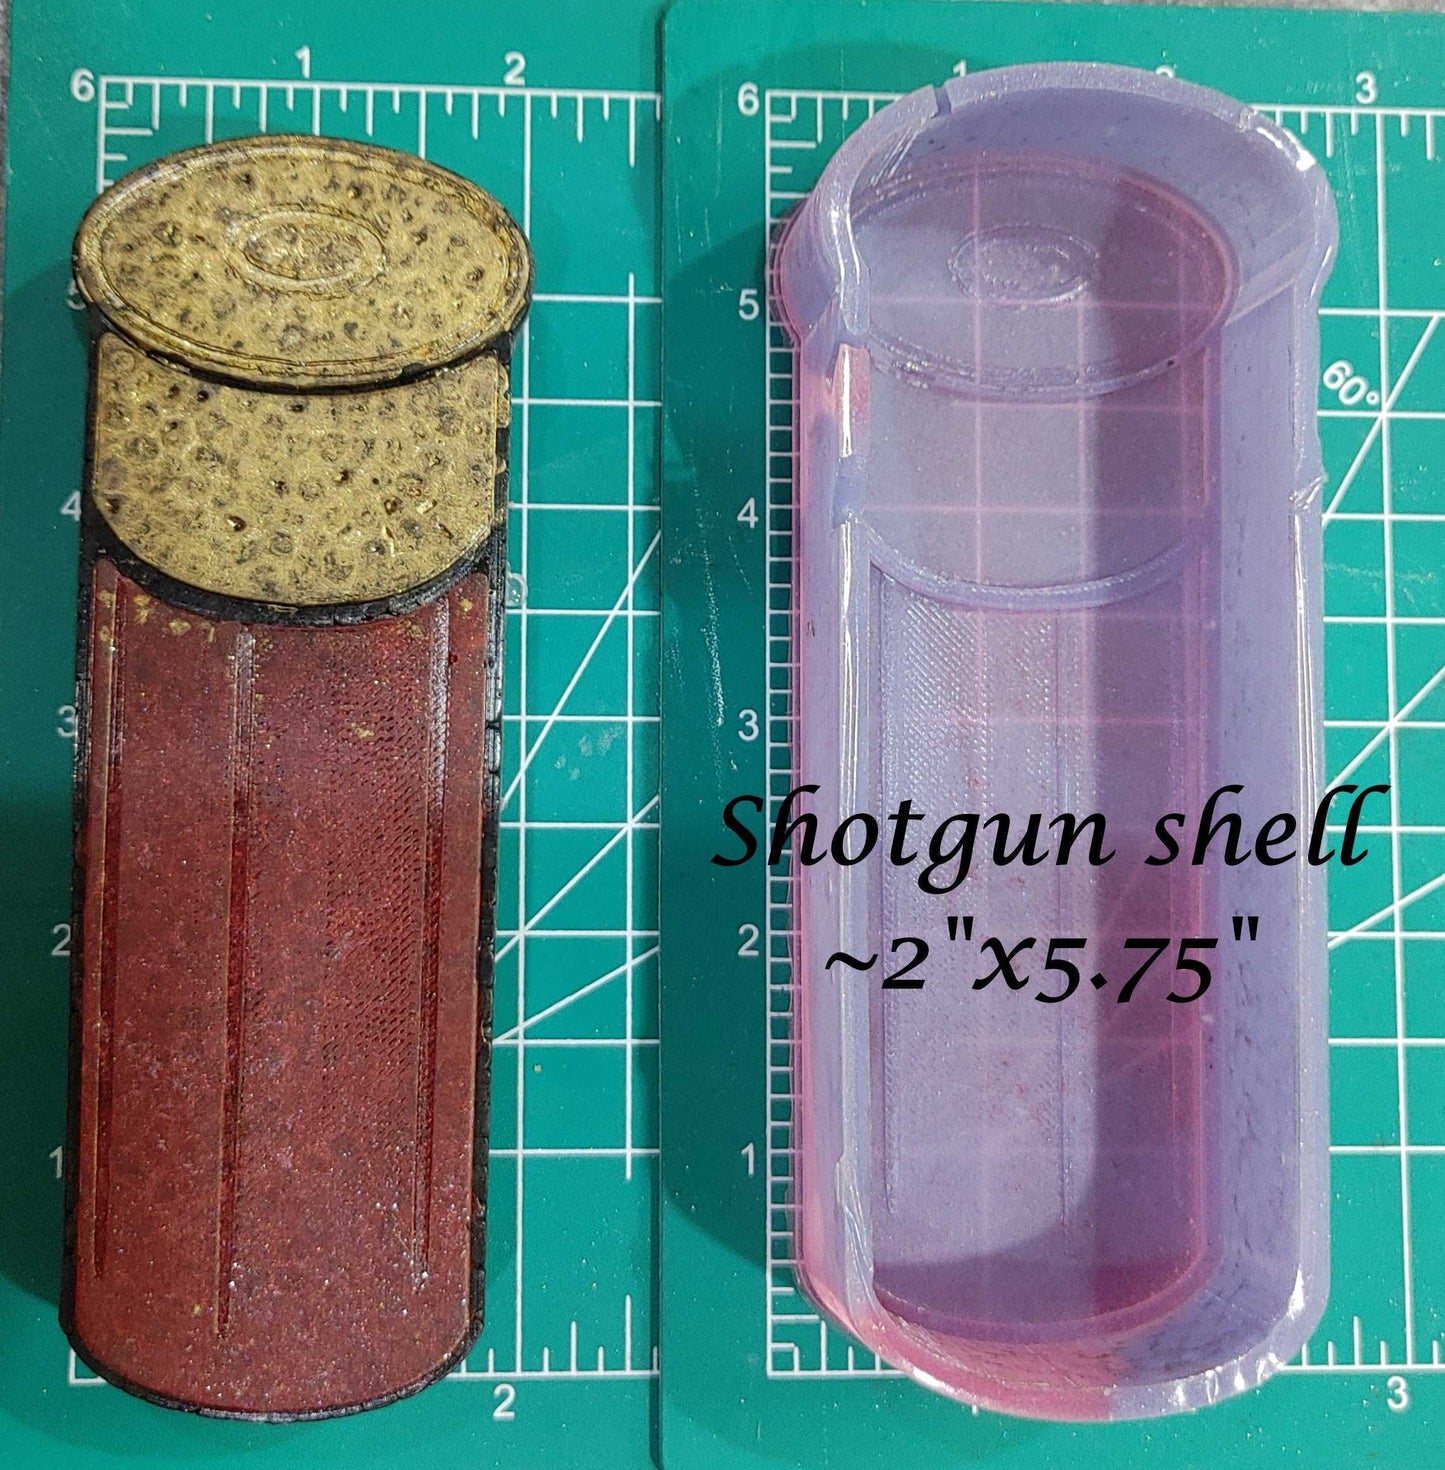 Shotgun Shell - Silicone freshie mold - Silicone Mold